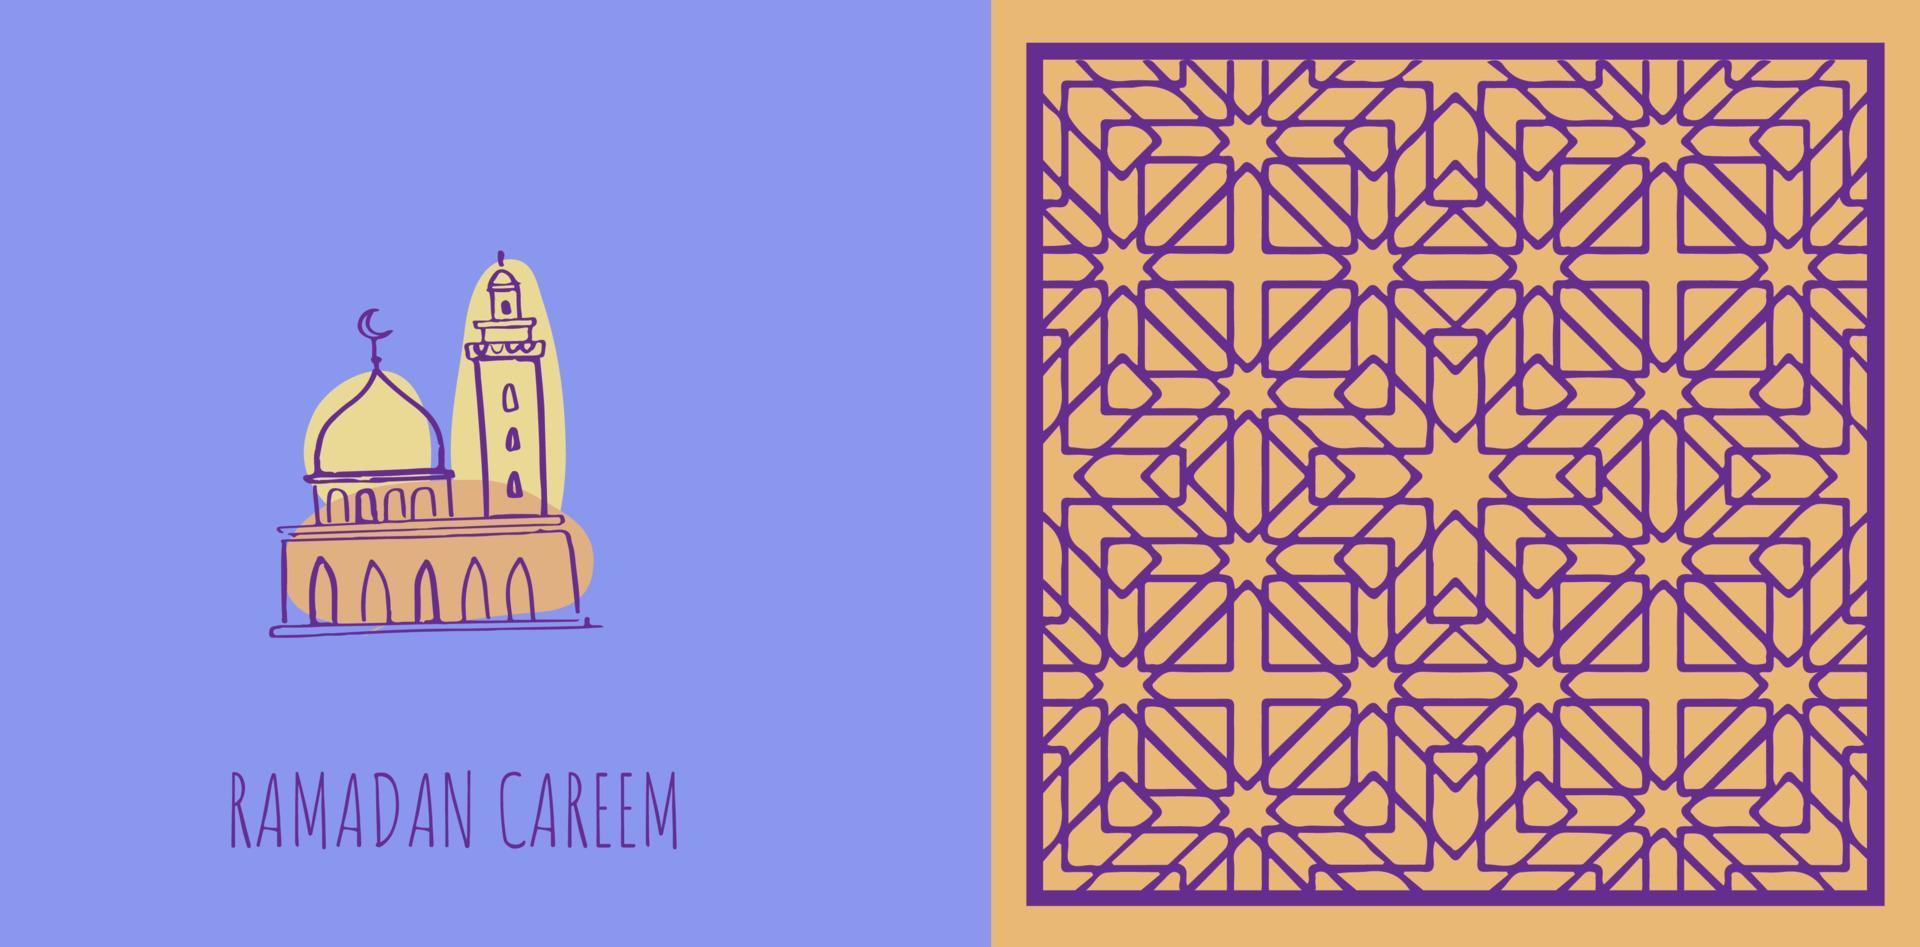 Ramadan kareem. islamico saluto carta modello islamico ornamento vettore